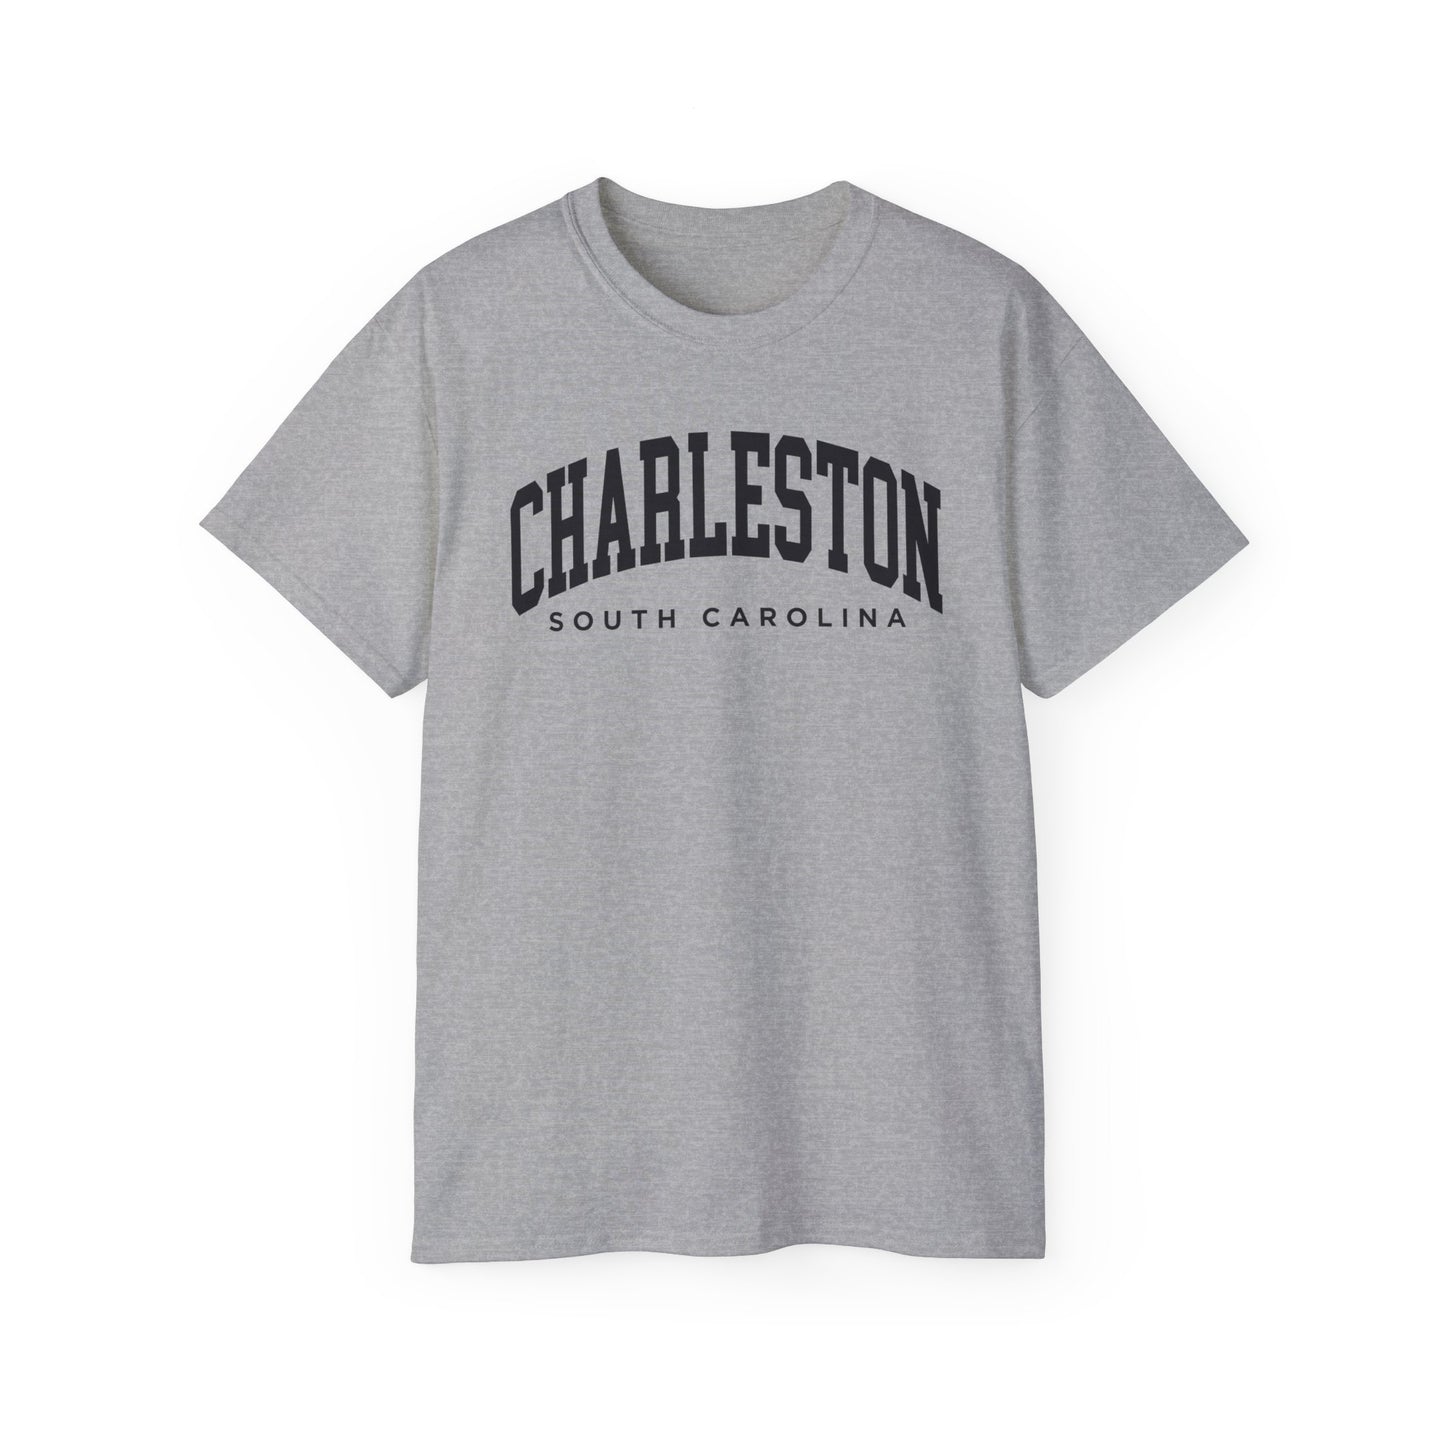 Charleston South Carolina Tee